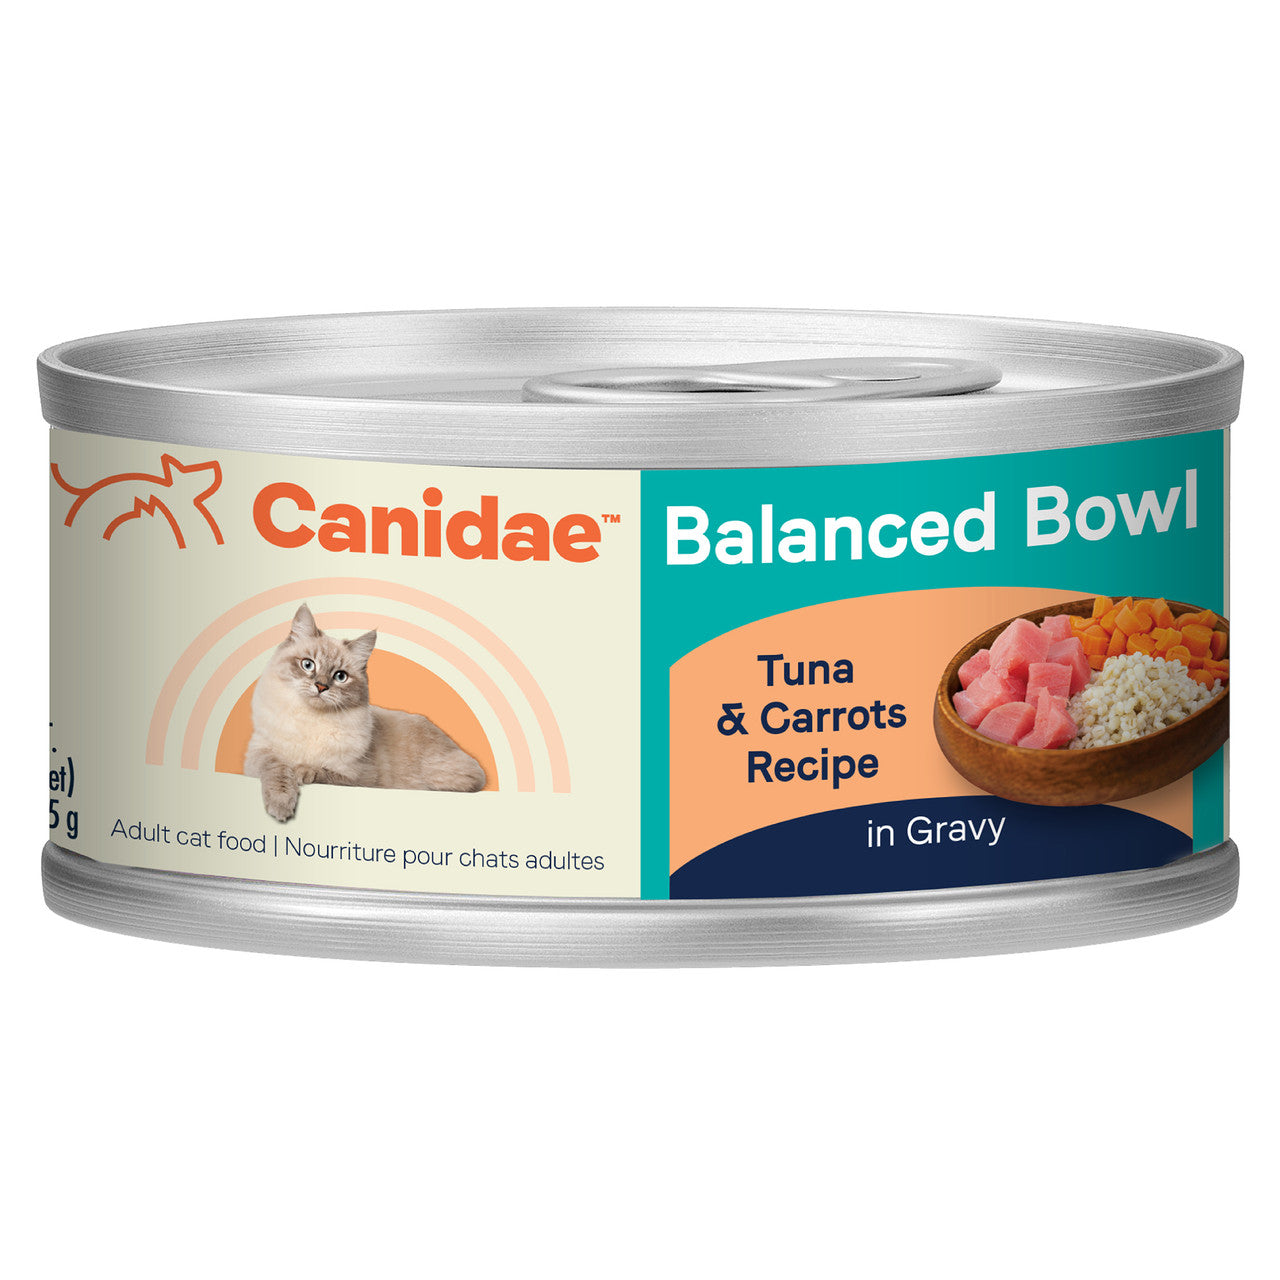 Canidae Balanced Bowl, Tuna & Carrots Recipe 3-oz, Wet Cat Food, Case Of 12